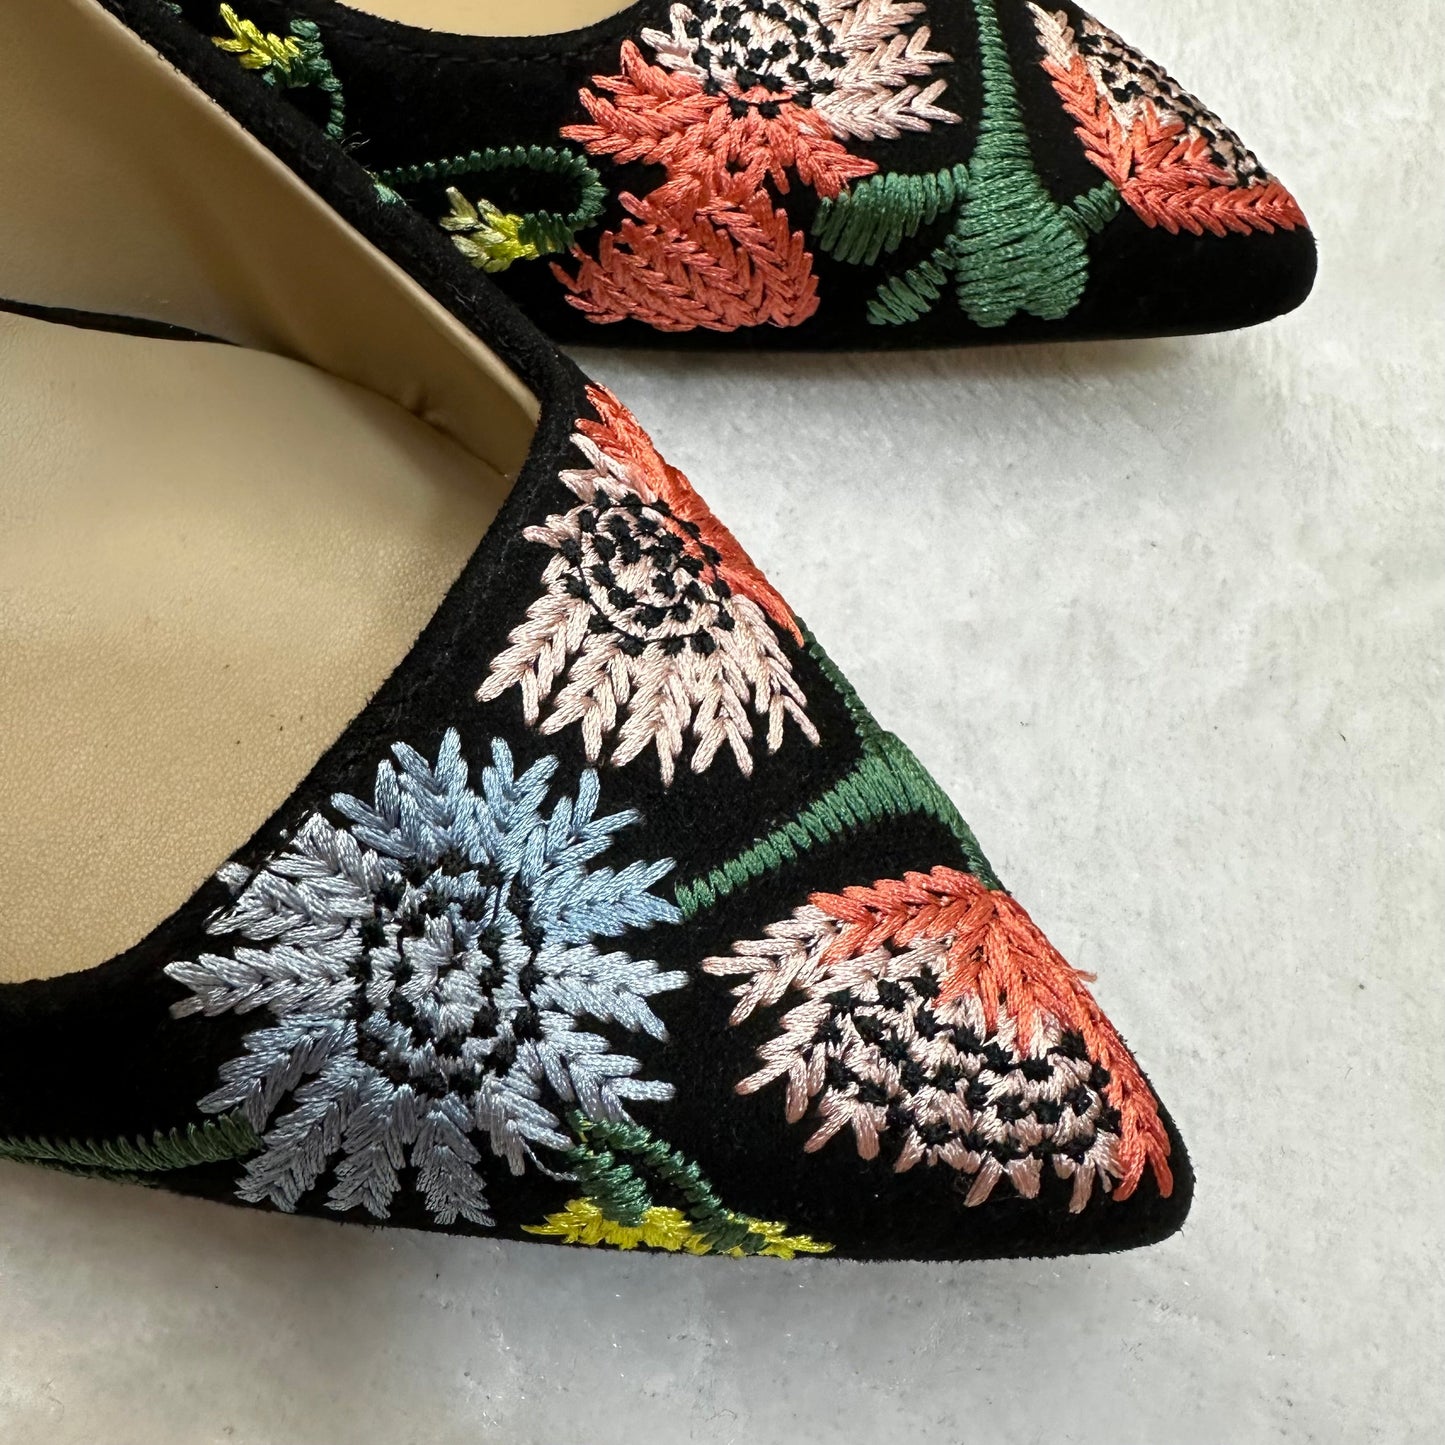 Floral Shoes Heels Stiletto Ann Taylor, Size 8.5